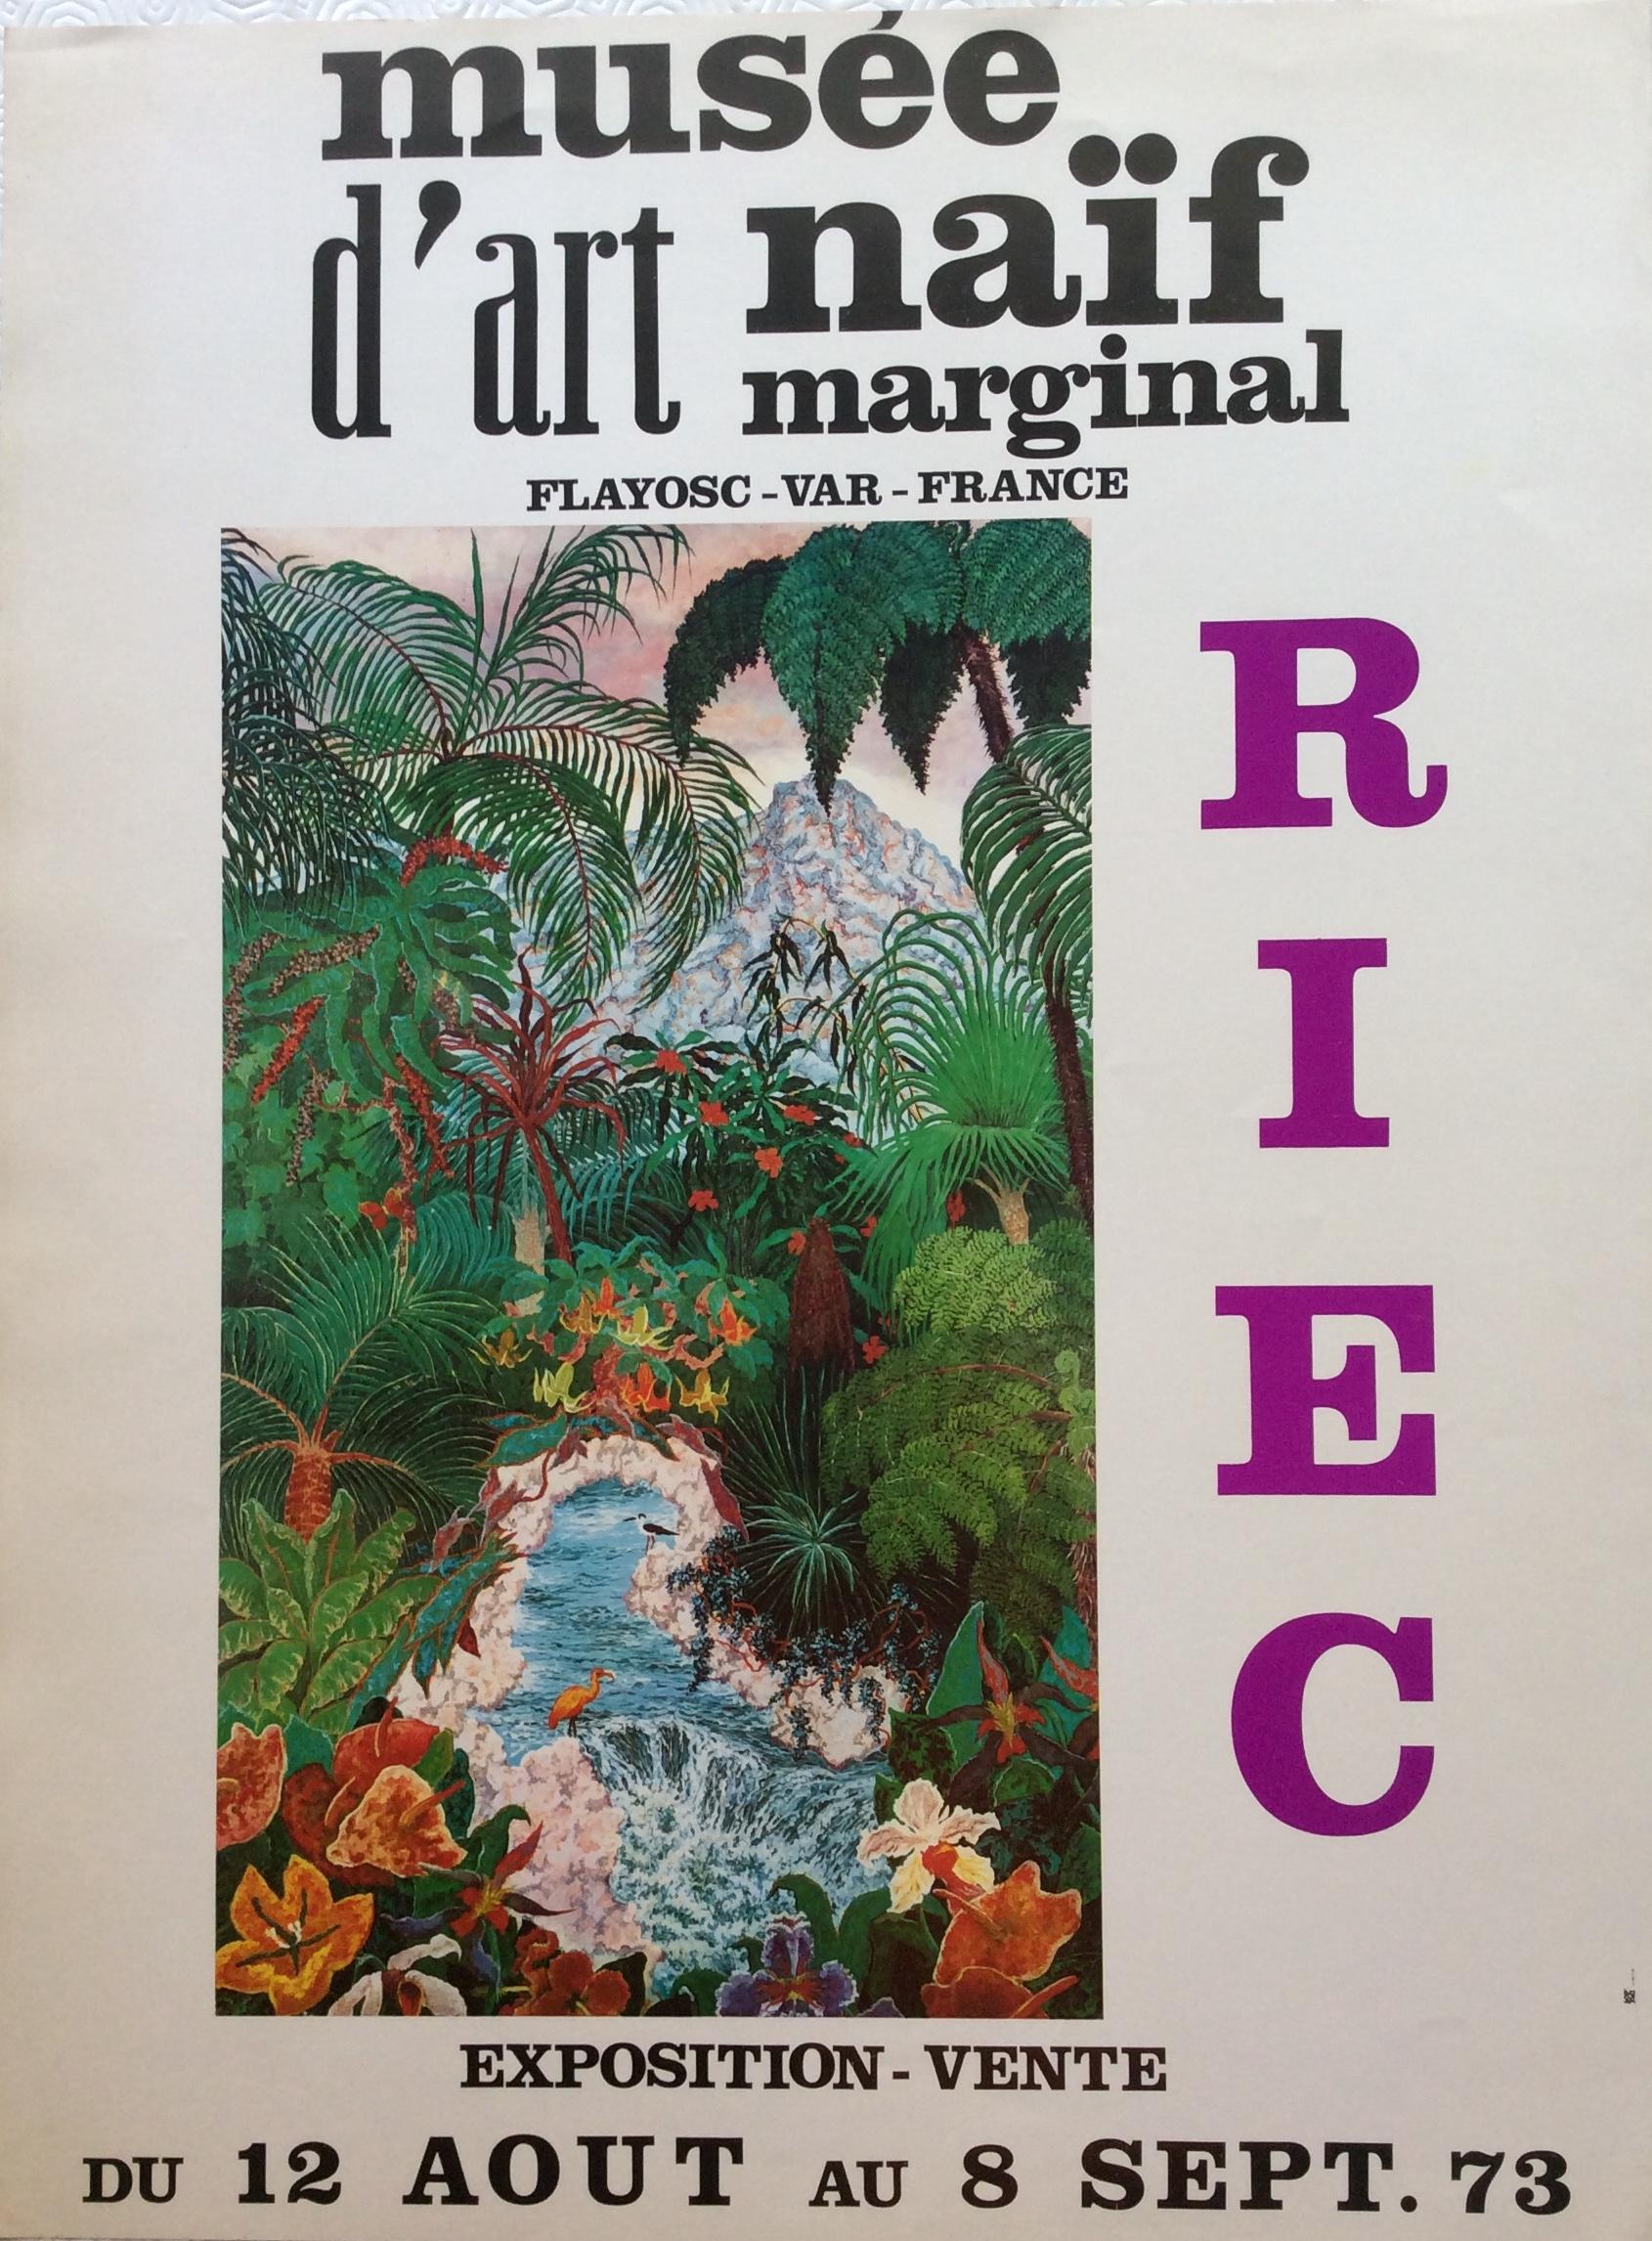 Paper Nature Depicted 1970s Vintage Riec Art Exhibition Poster